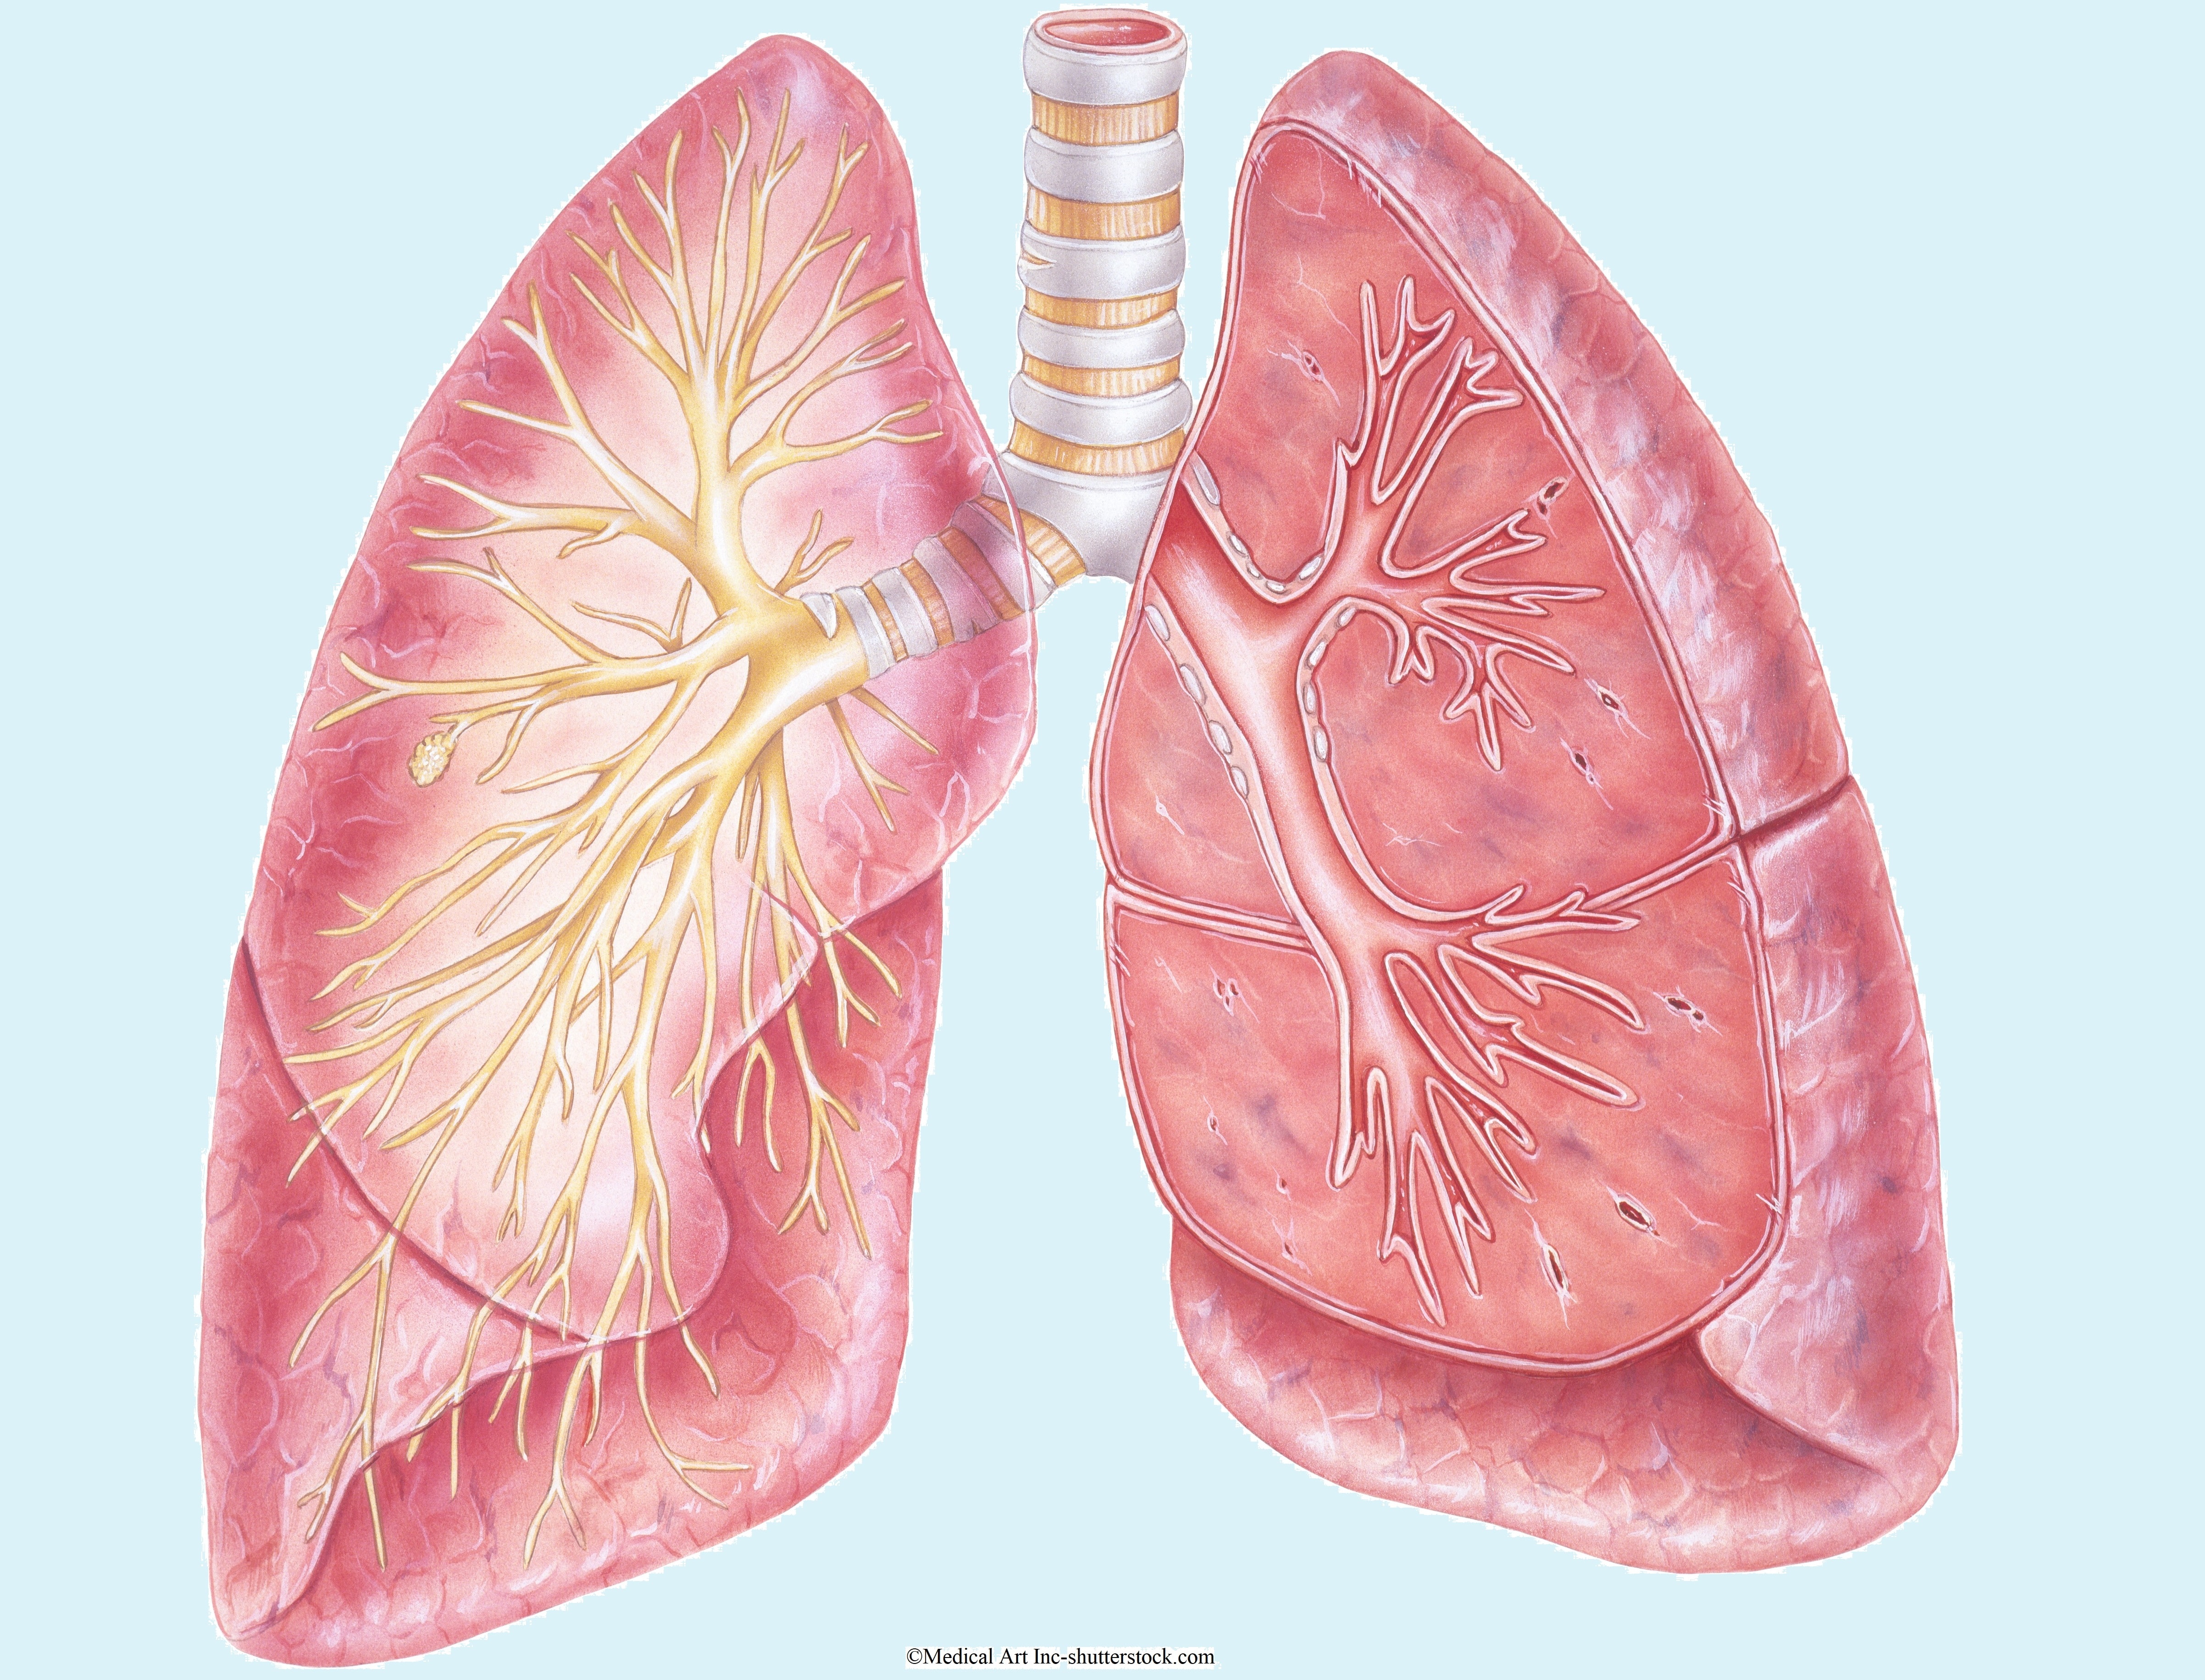  Asthma bronchiale